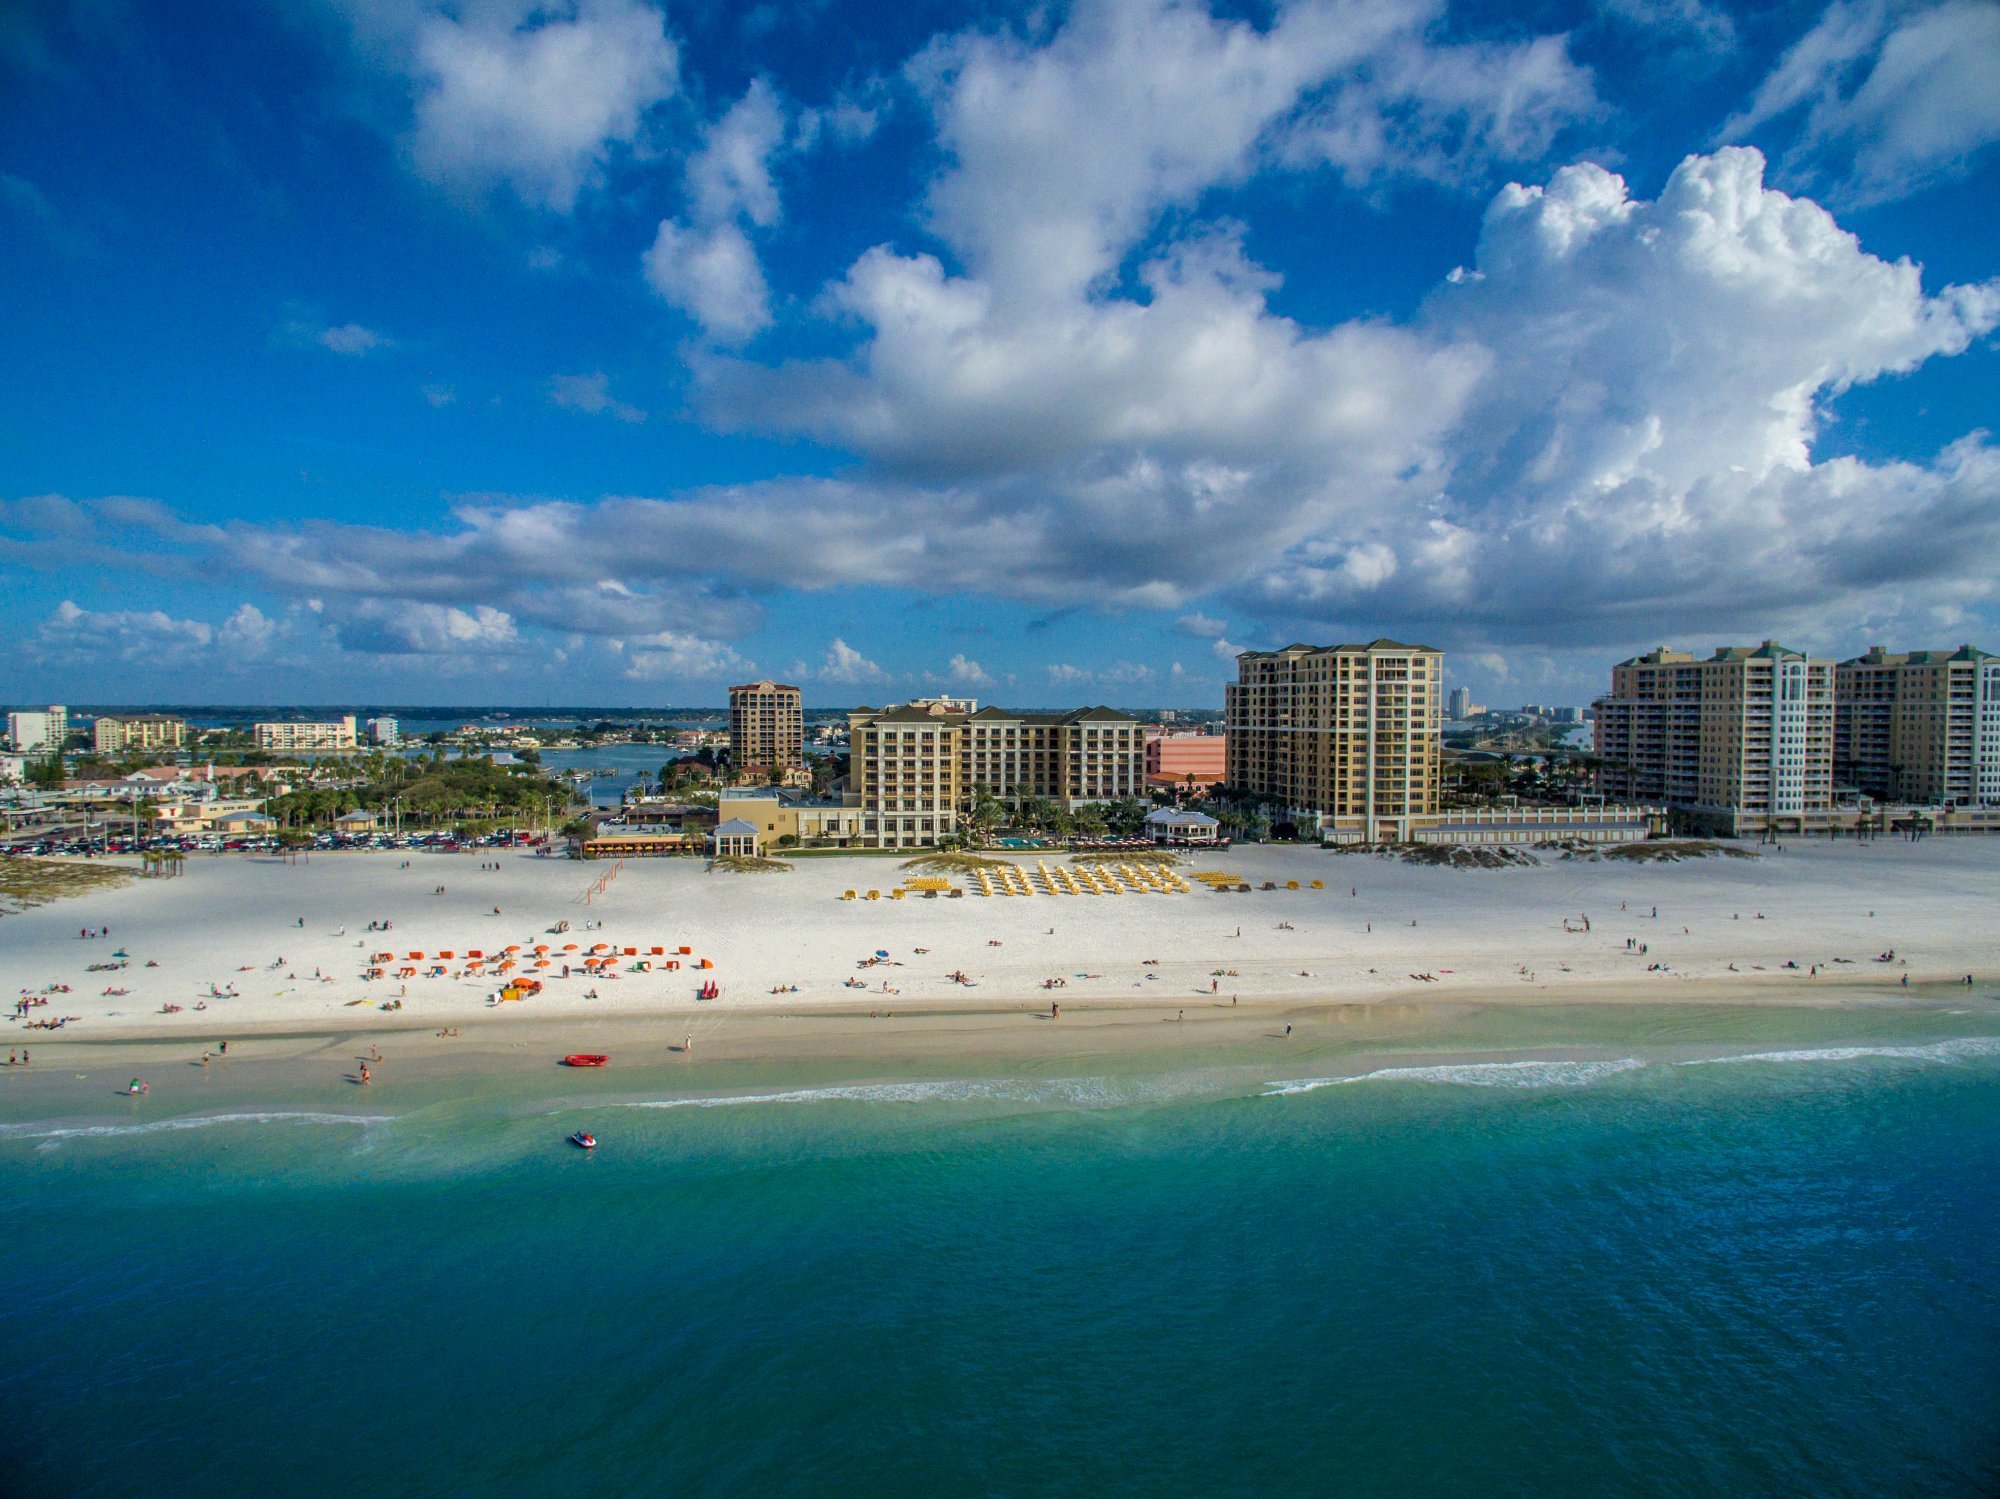 Photo of Sandpearl Resort, Clearwater Beach, FL